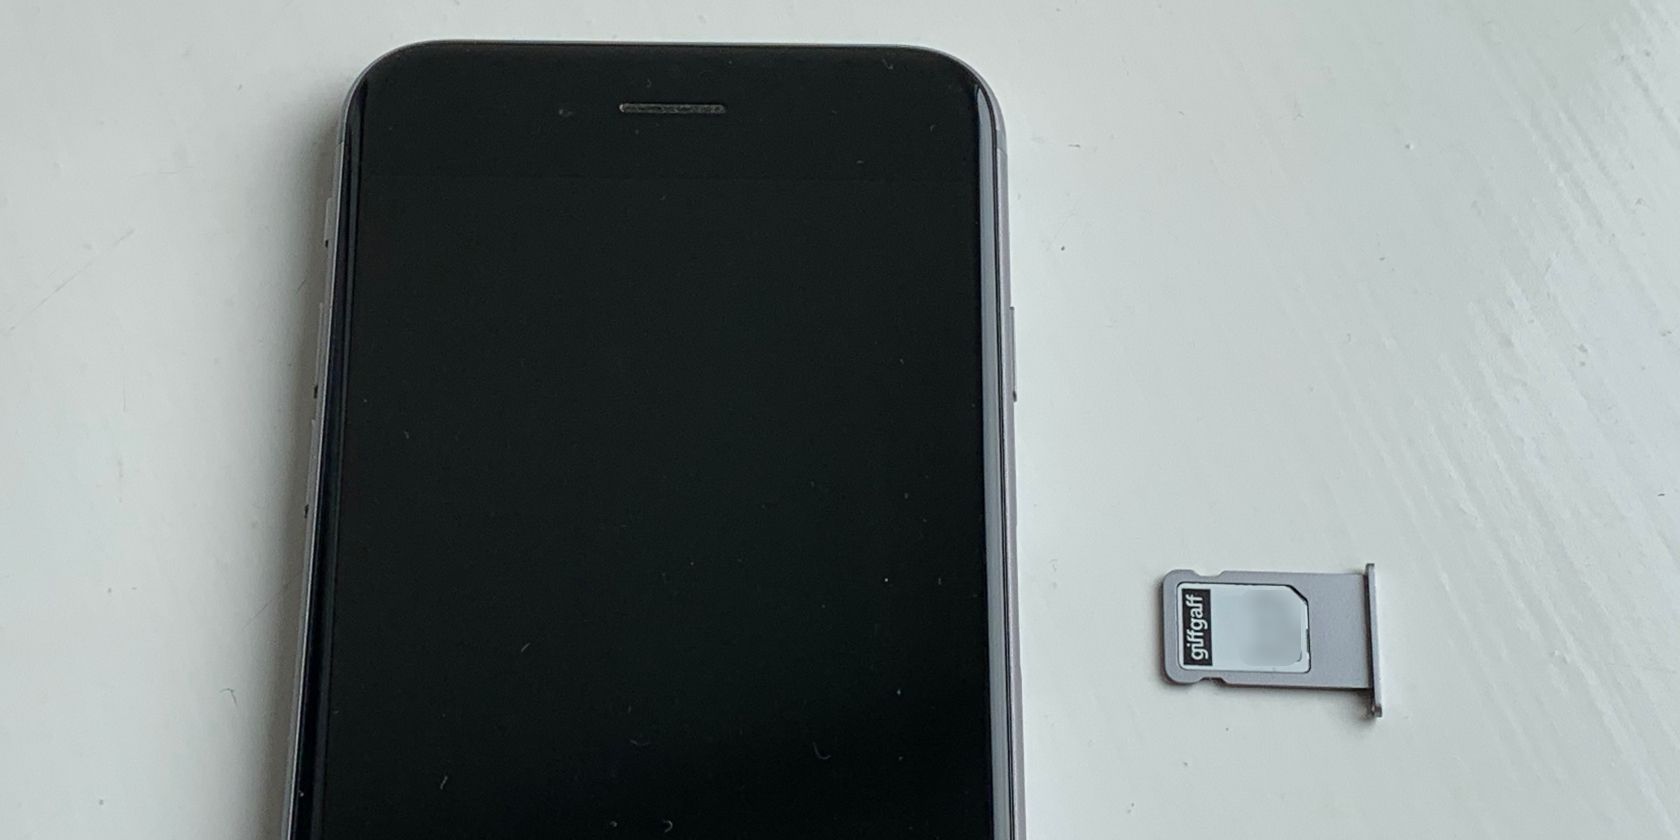 SIM card in tray next to iPhone2 - Come rimuovere una scheda SIM da un iPhone